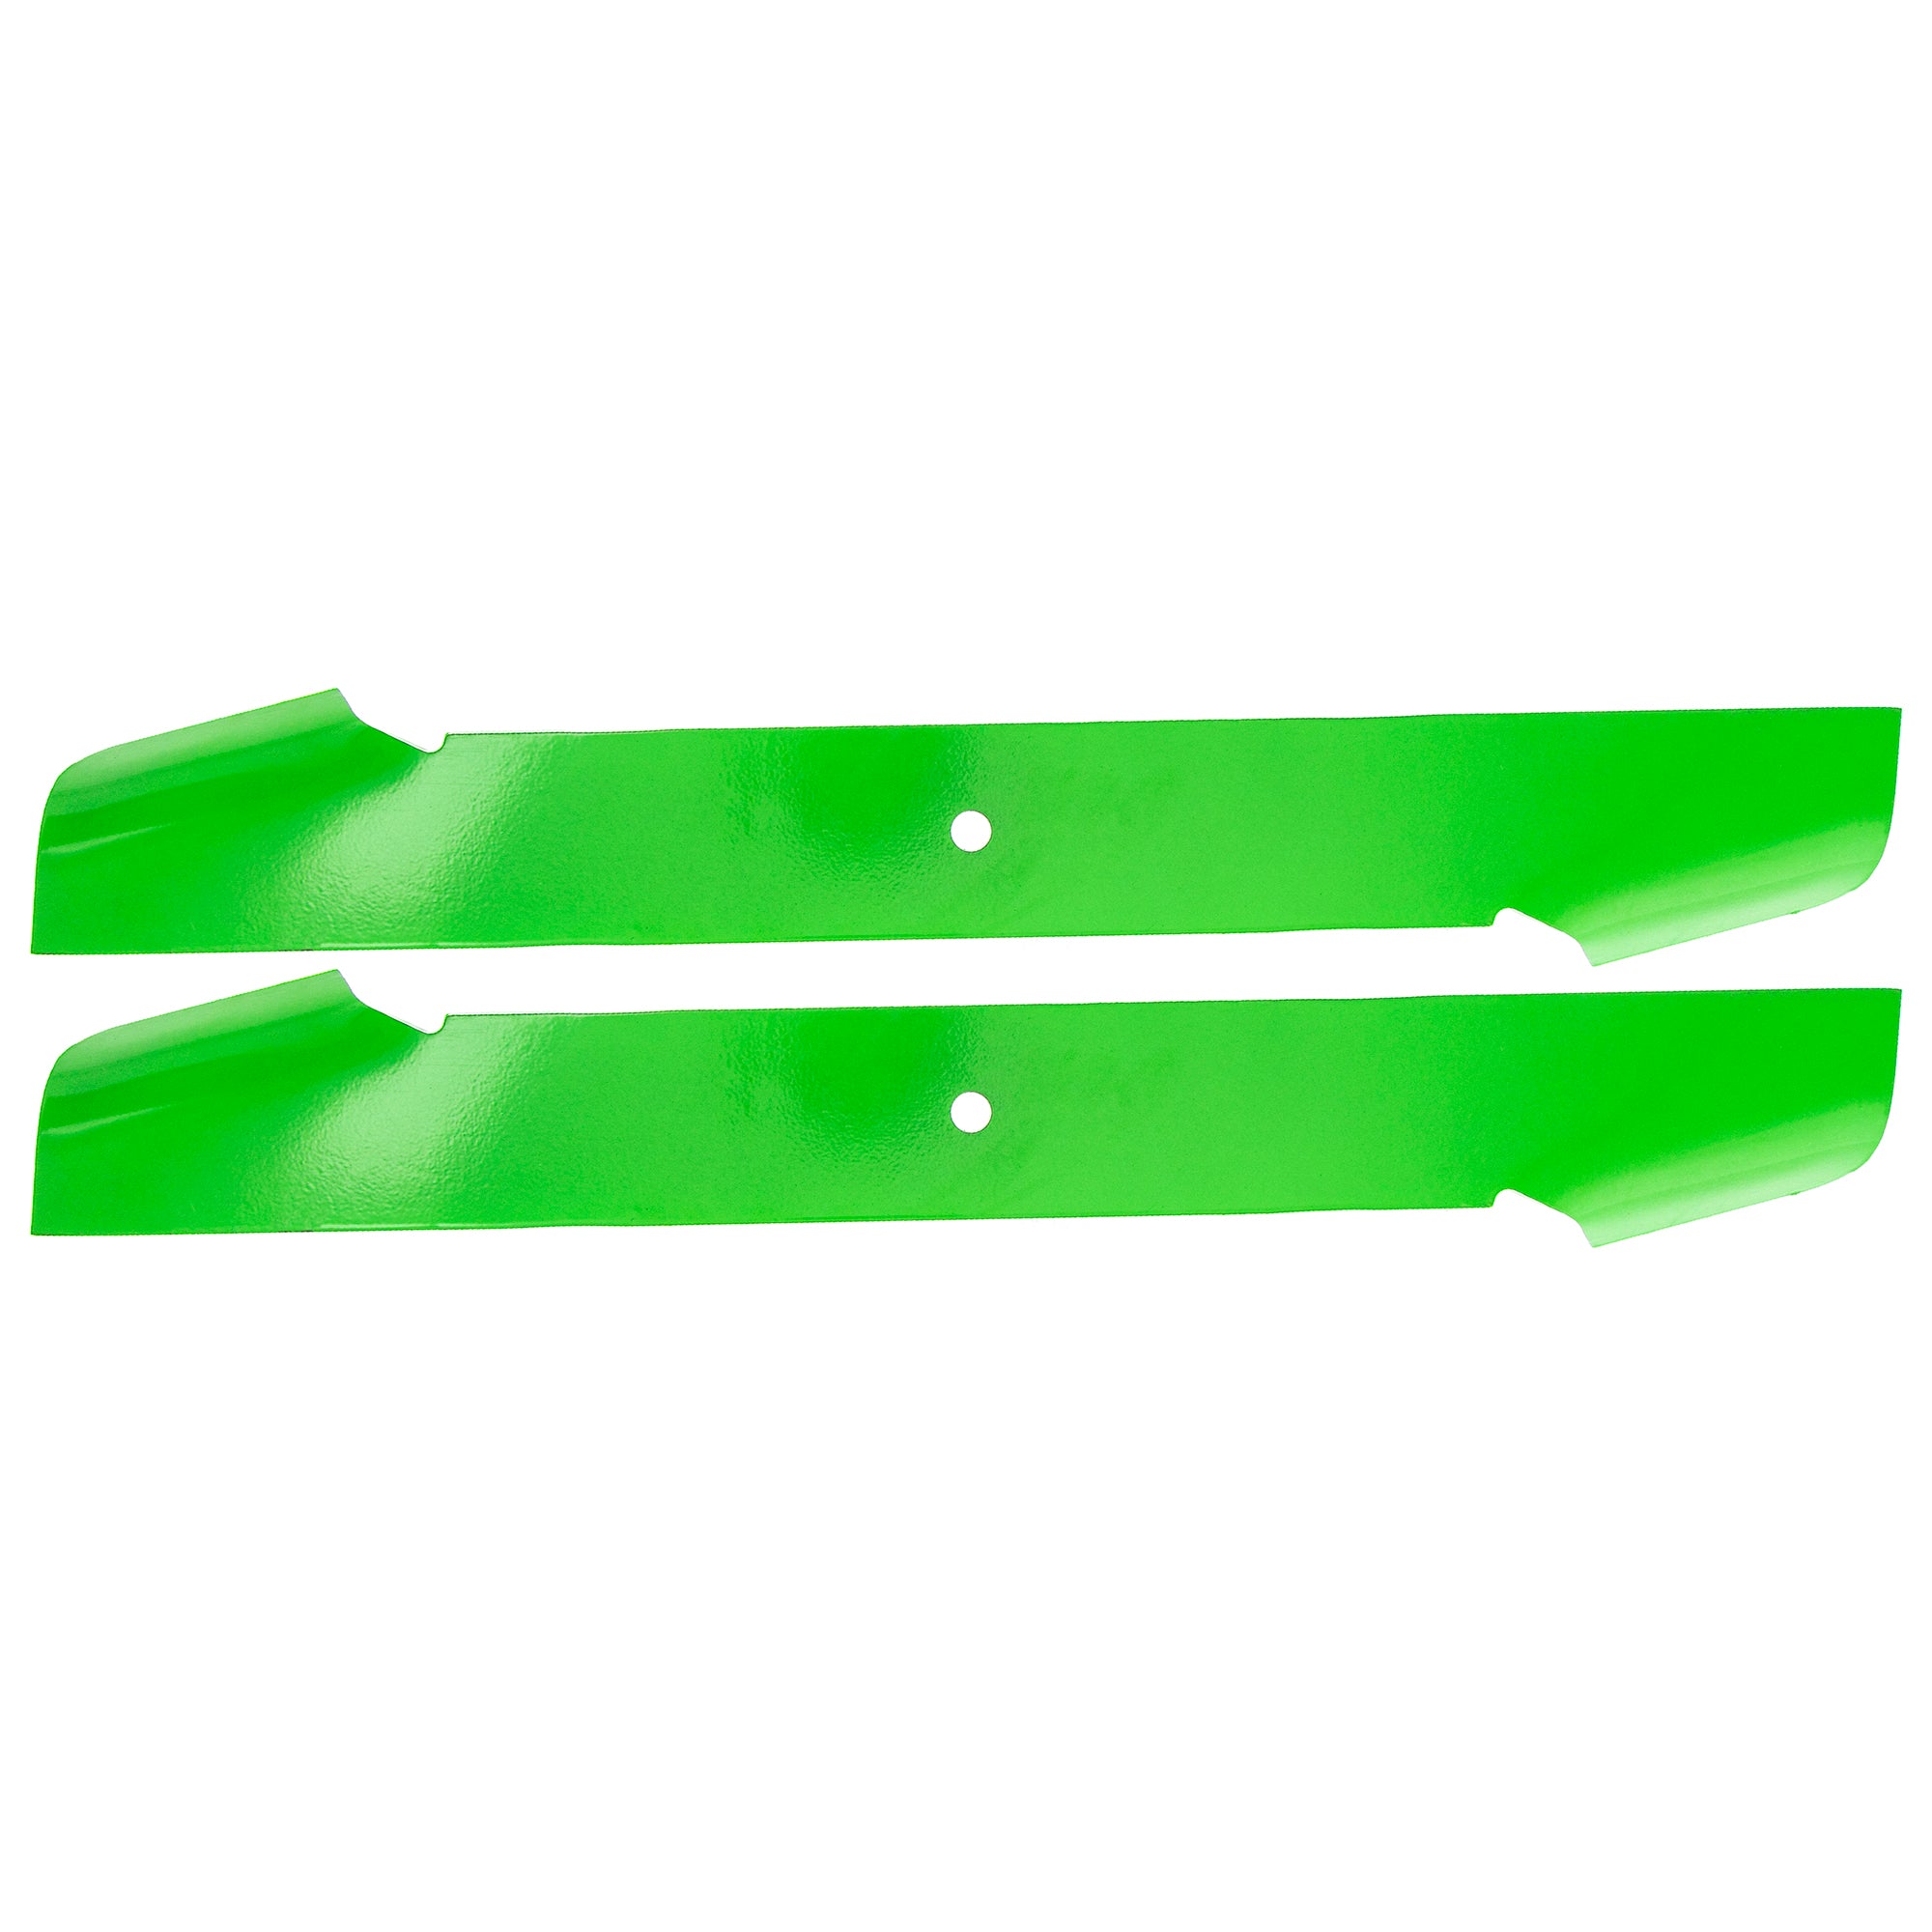 Deck Spindles & Mower Blades Kit For Roper Poulan Pro AYP MK1001855